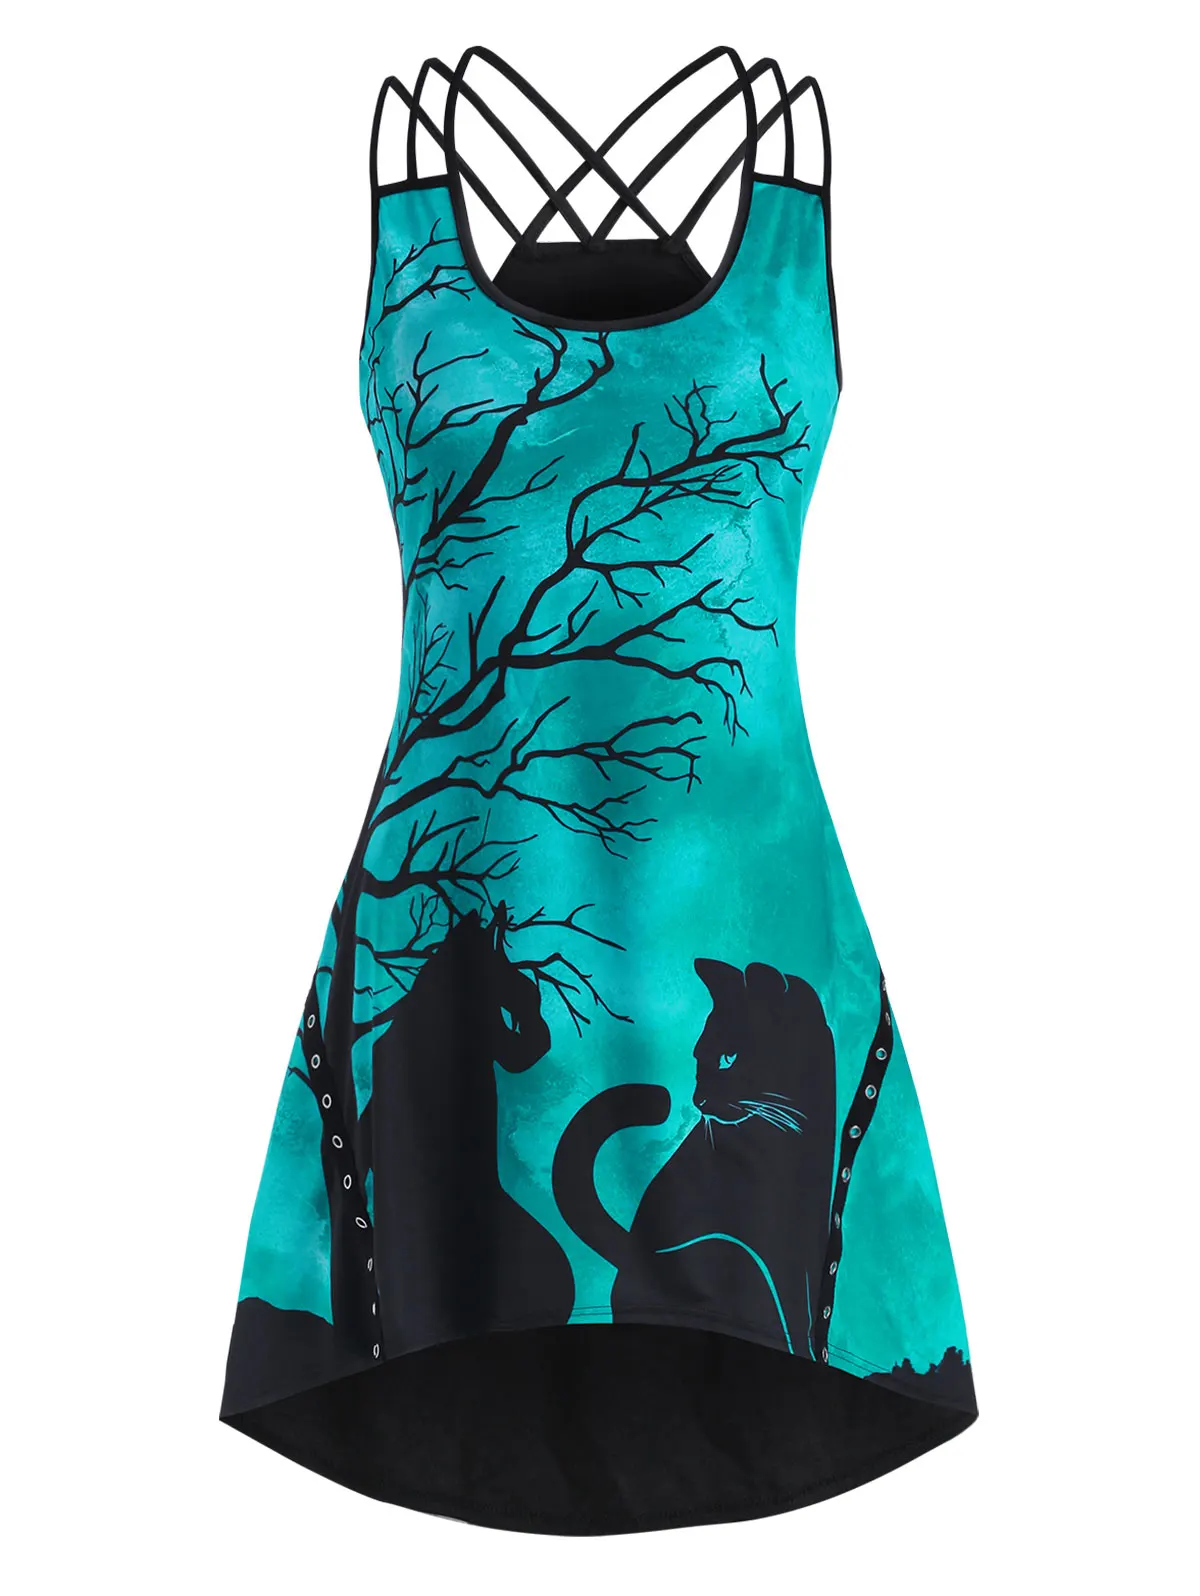 

Vintage Gothic Dress Women Sleeveless Crisscross Tree Cat Print Grommet High Low Party Dress Casual Style